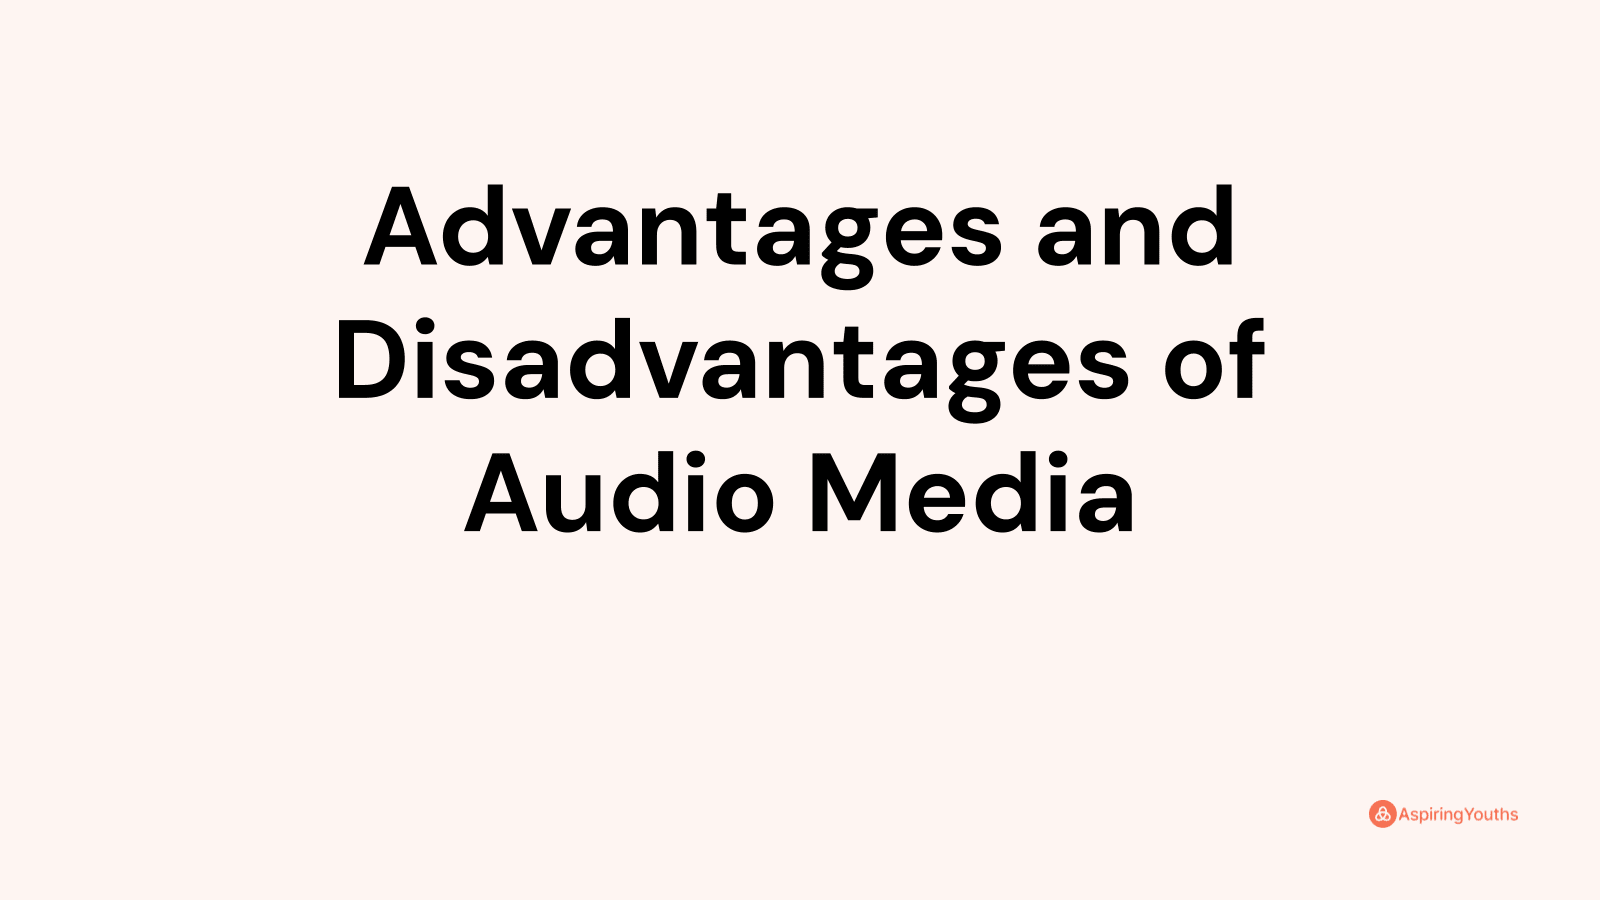 Advantages and disadvantages of Audio Media